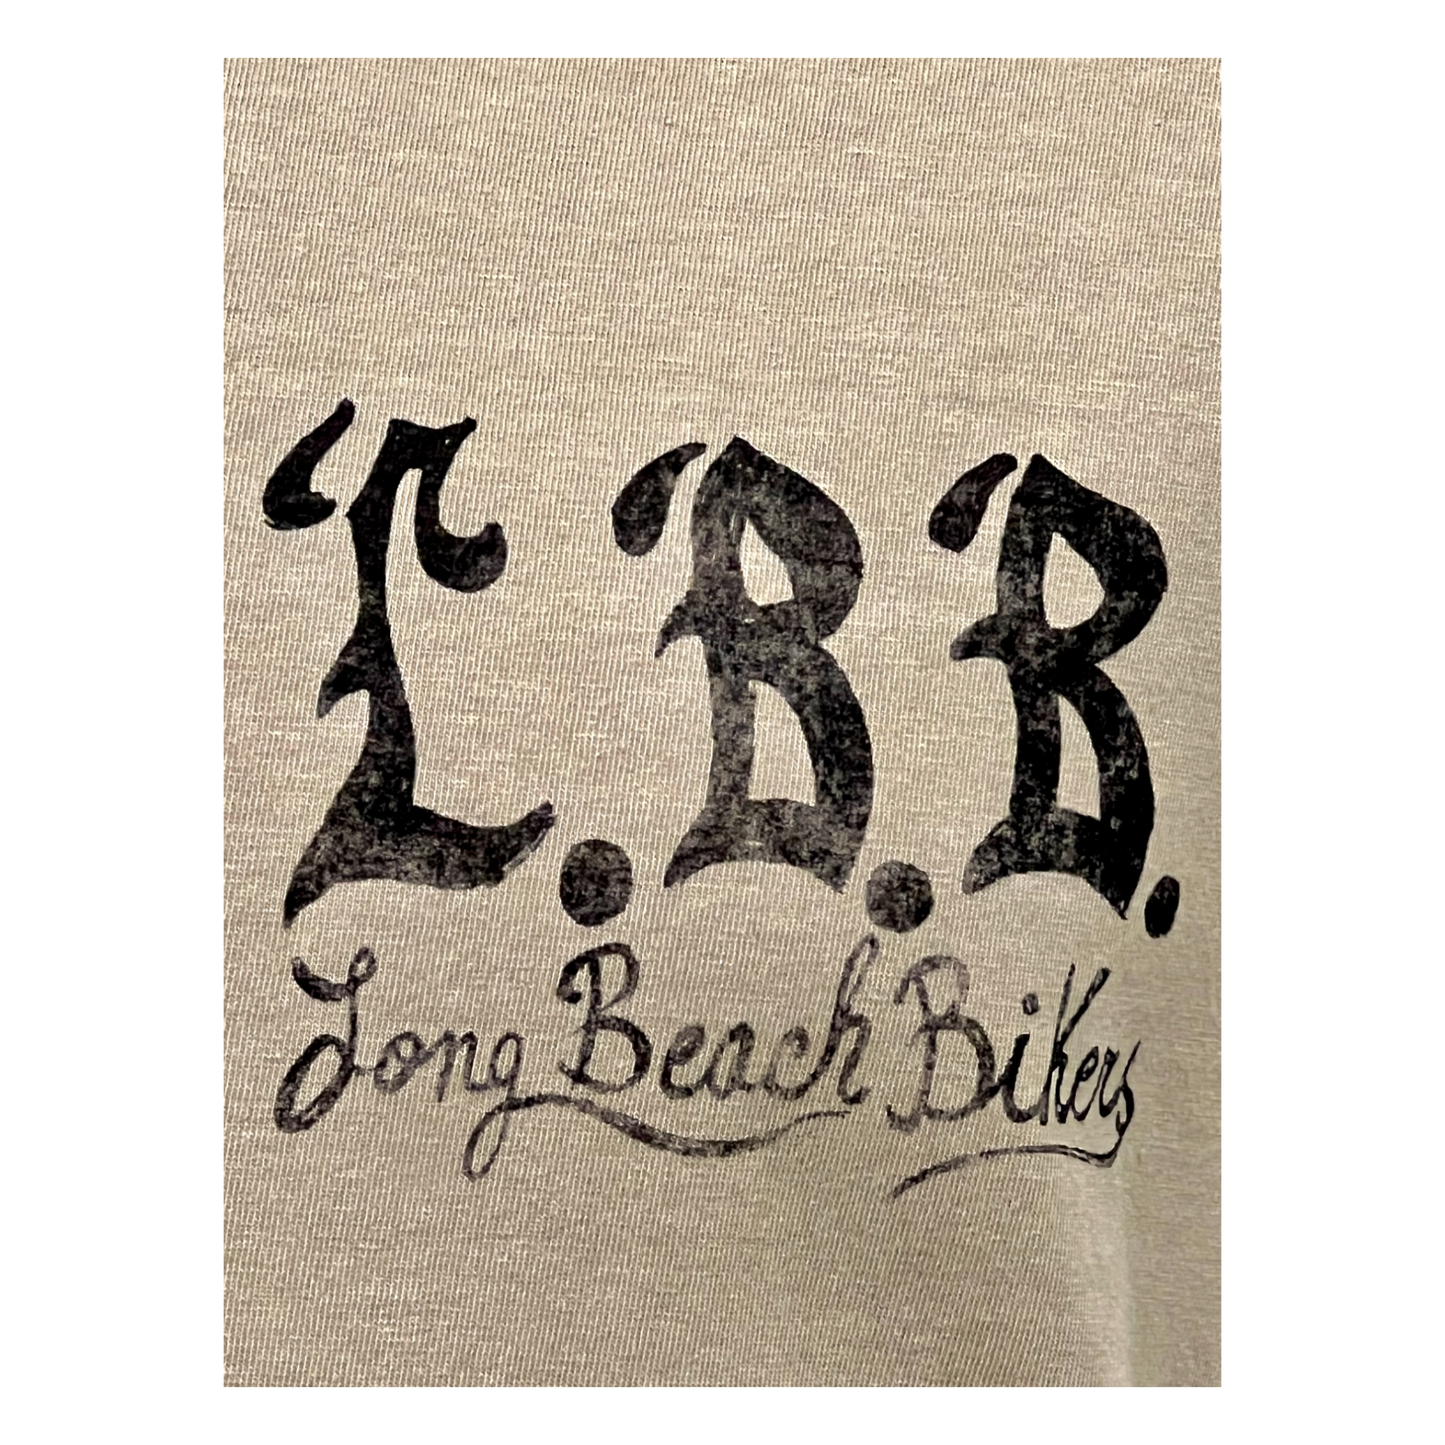 Bowery NYC,T-Shirt,Bowery NYC. Long Beach Riders, Vintage Jersey T-Shirt, dunkler Sand,UNIT Hamburg